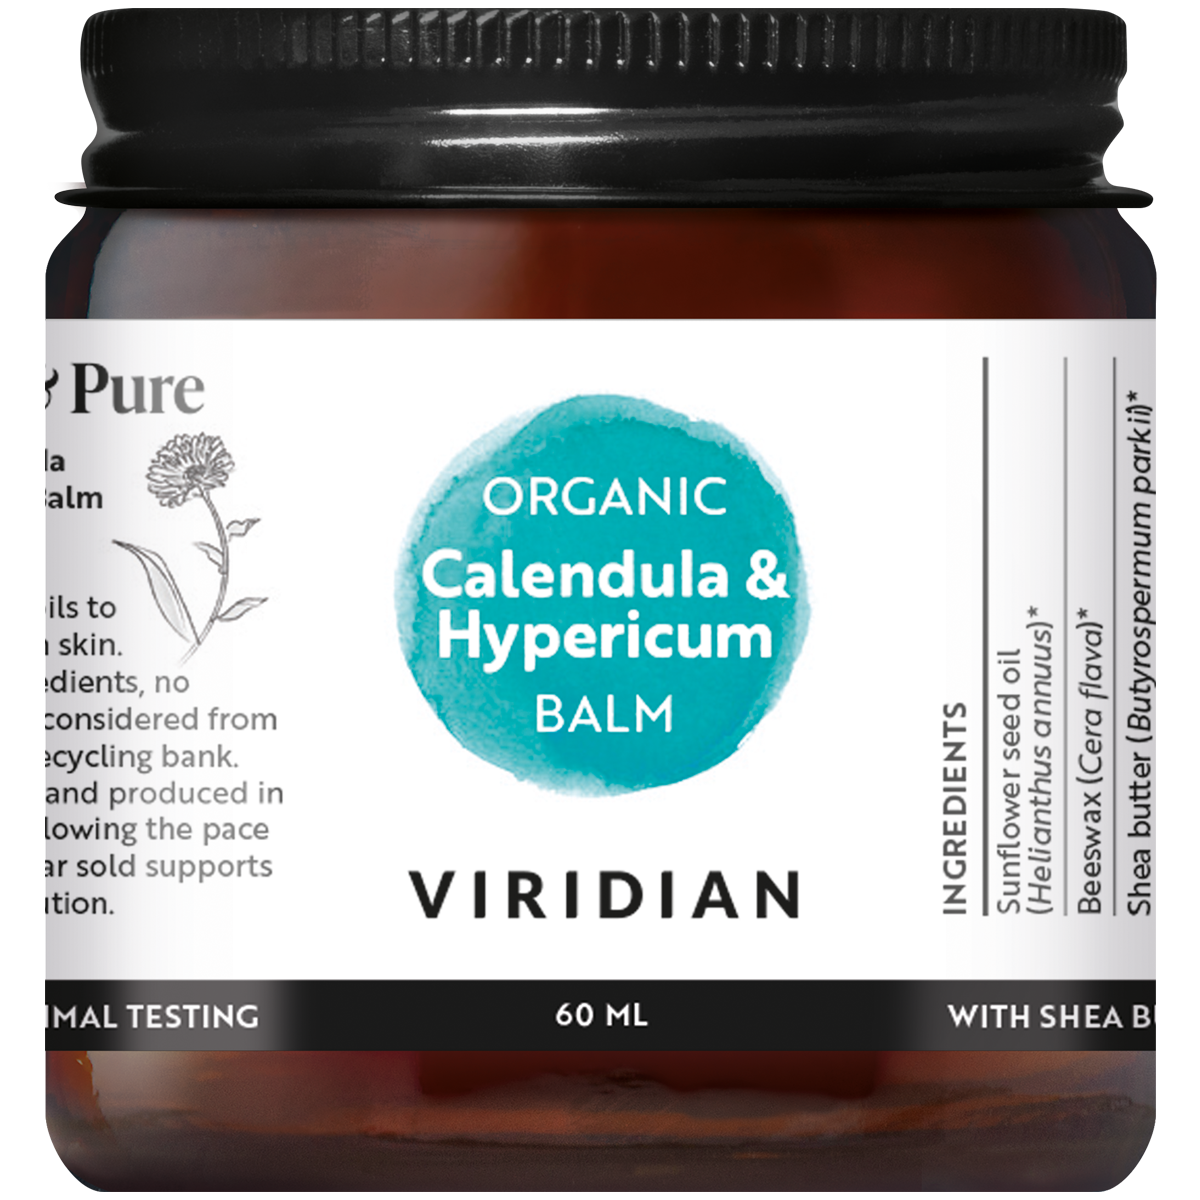   Organic Calendula&Hypericum Balm - 60 ml